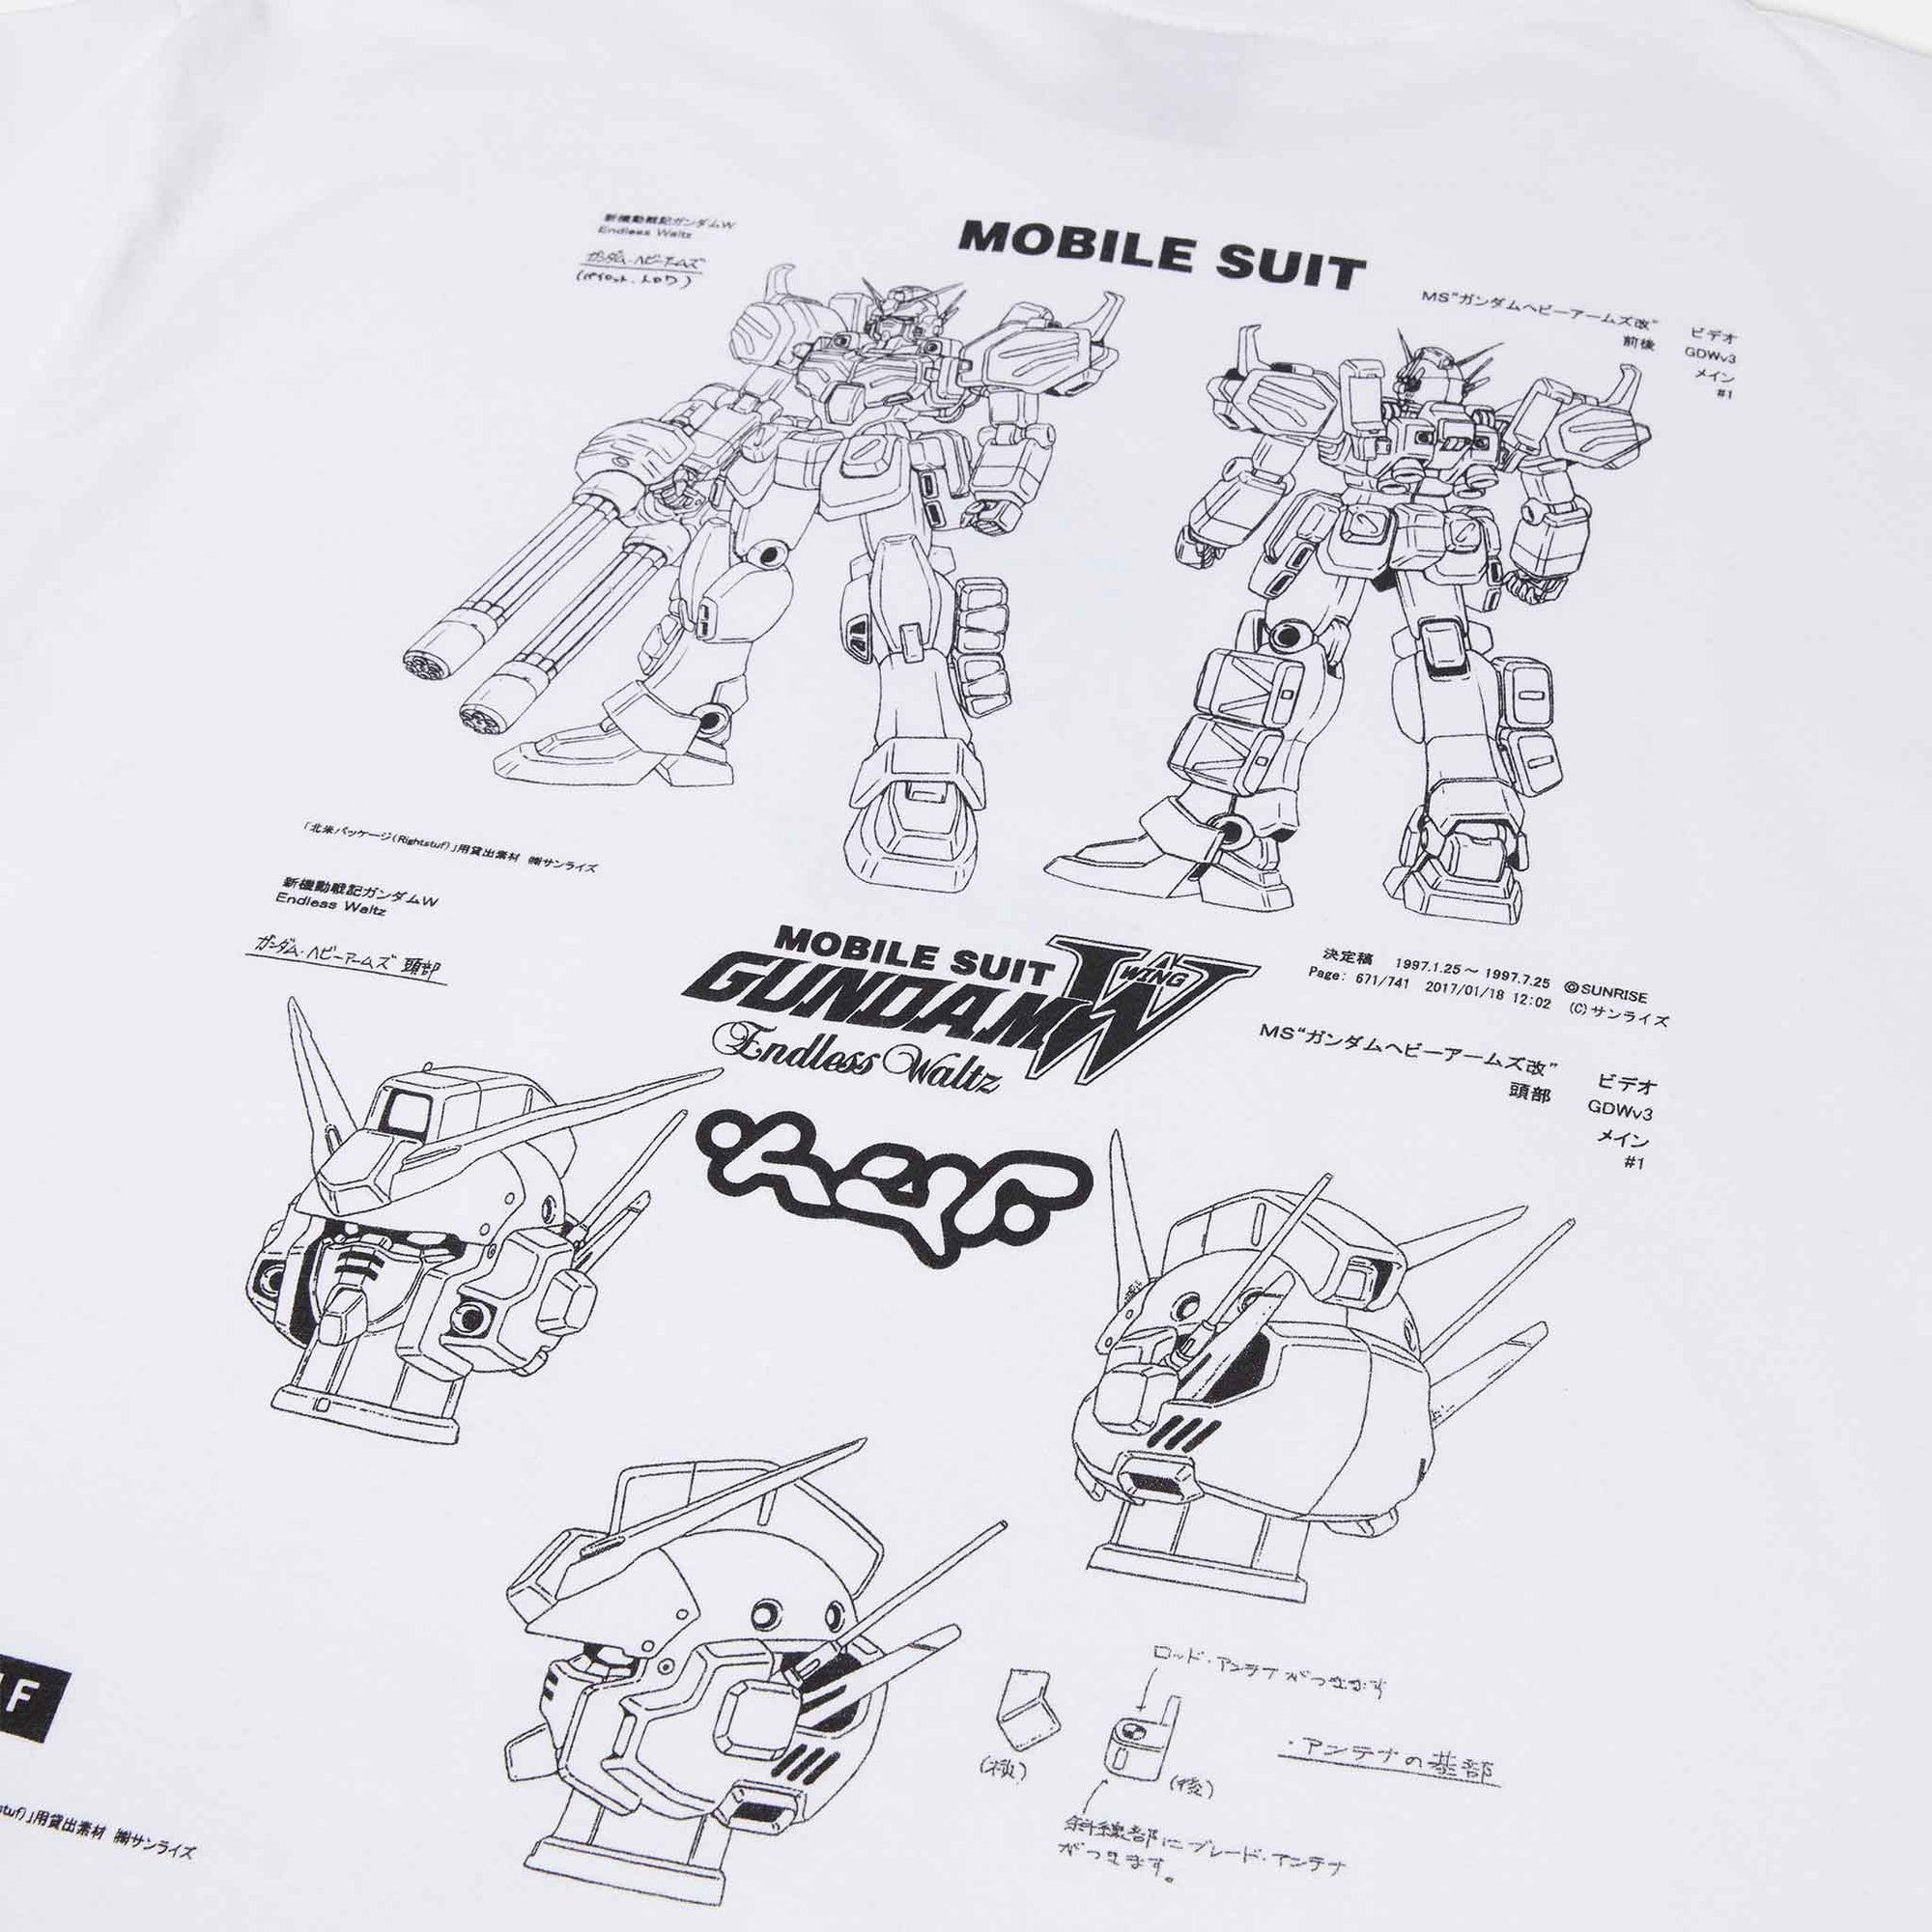 Huf - Gundam Wing Heavy Arms Schematics T-Shirt - White